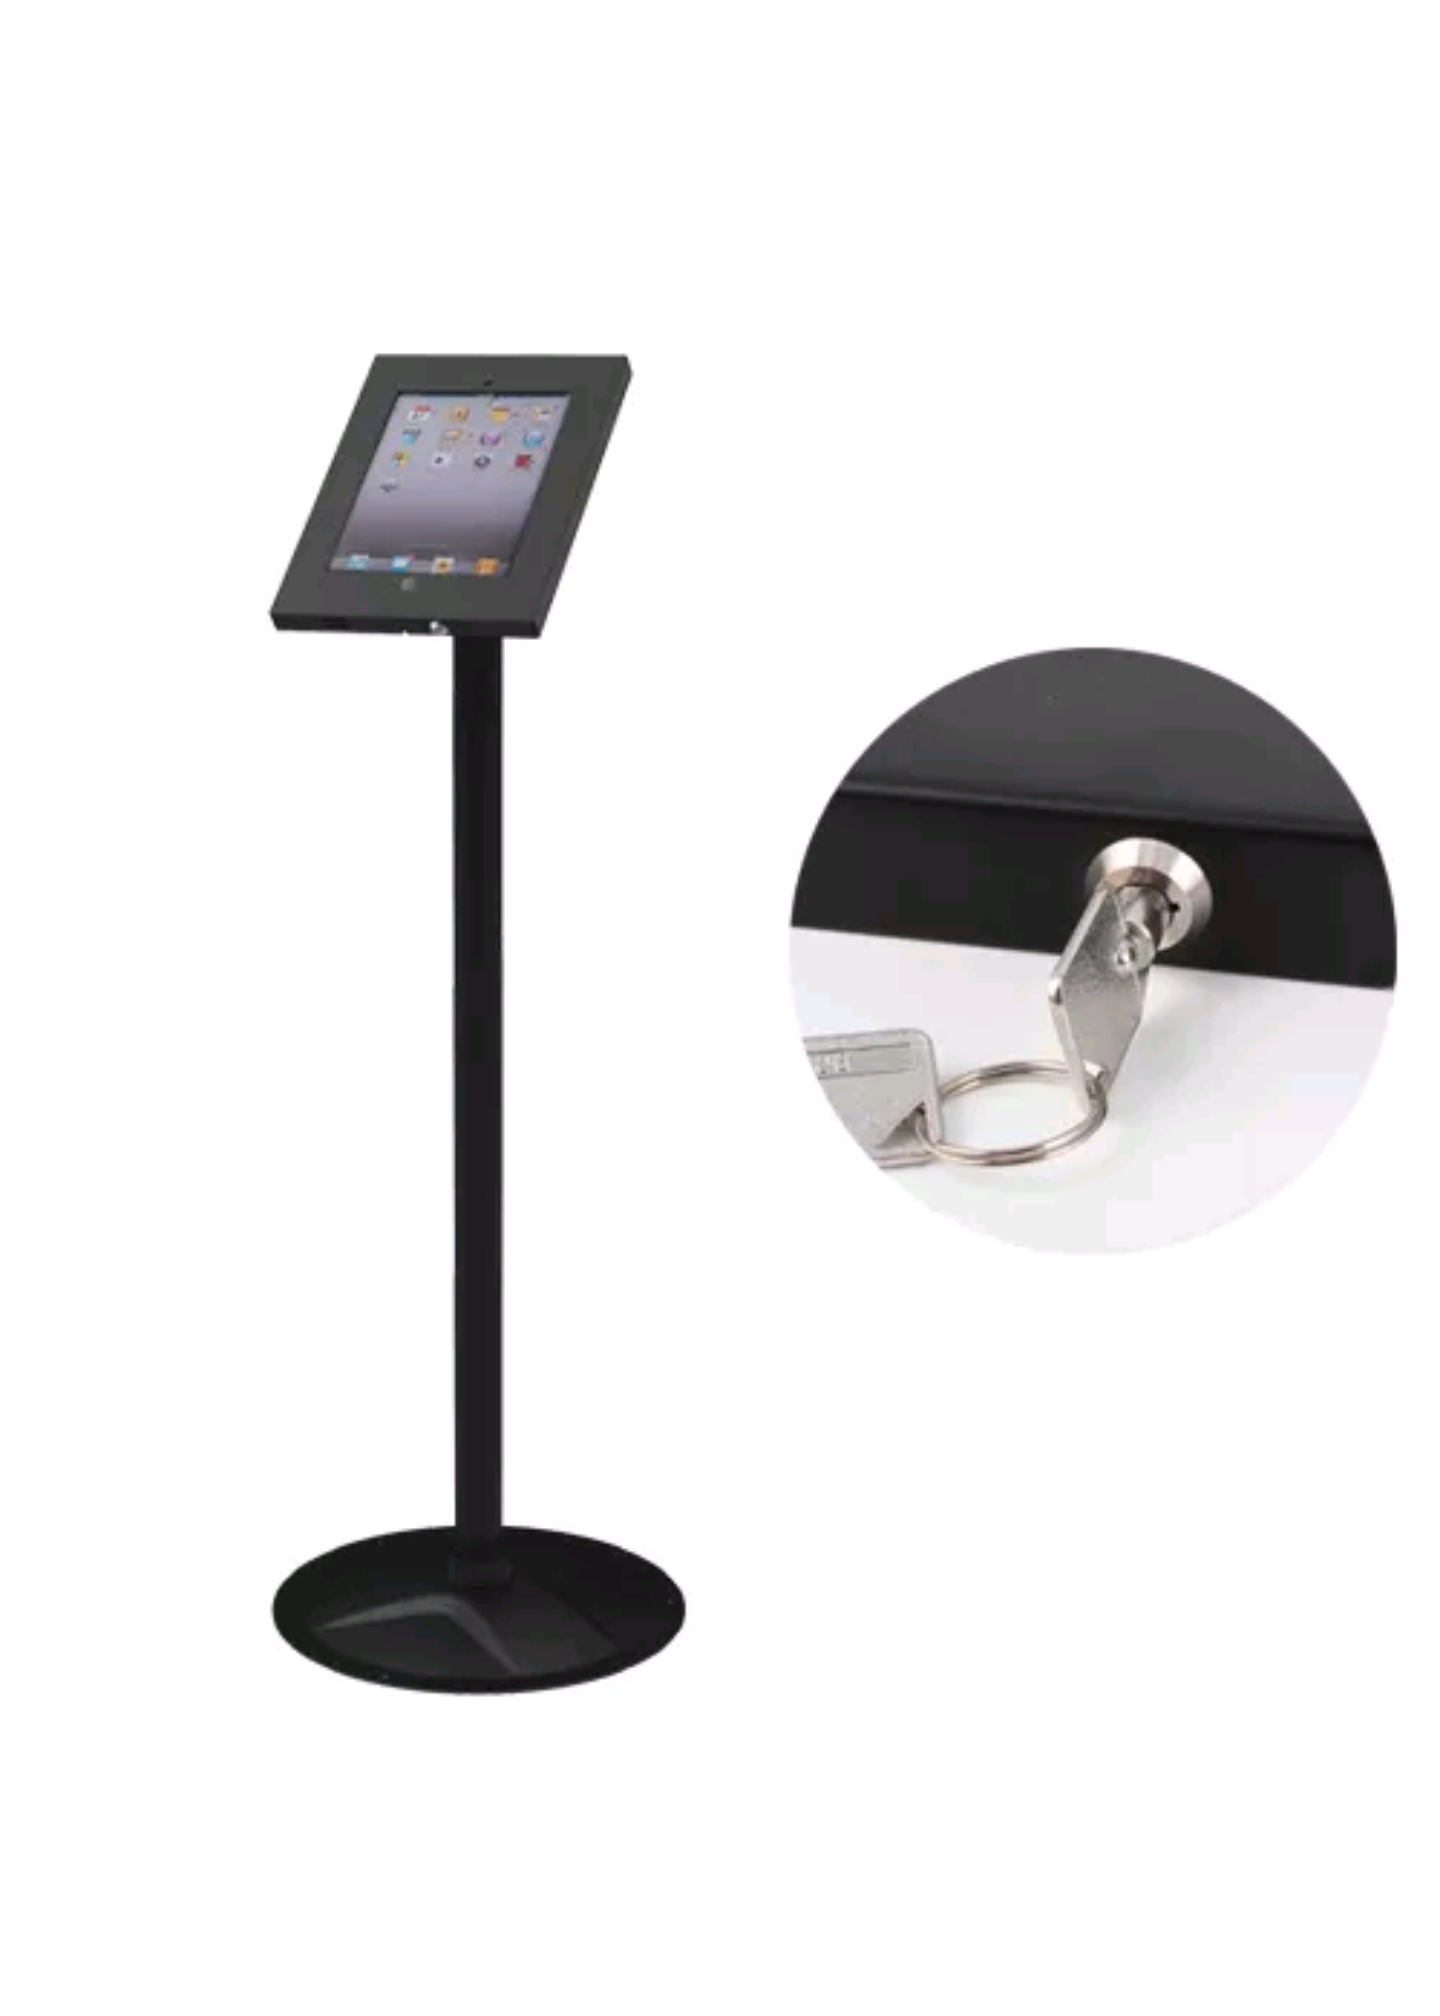 iPad 2/3/4 air Lockable stand - Simtek World